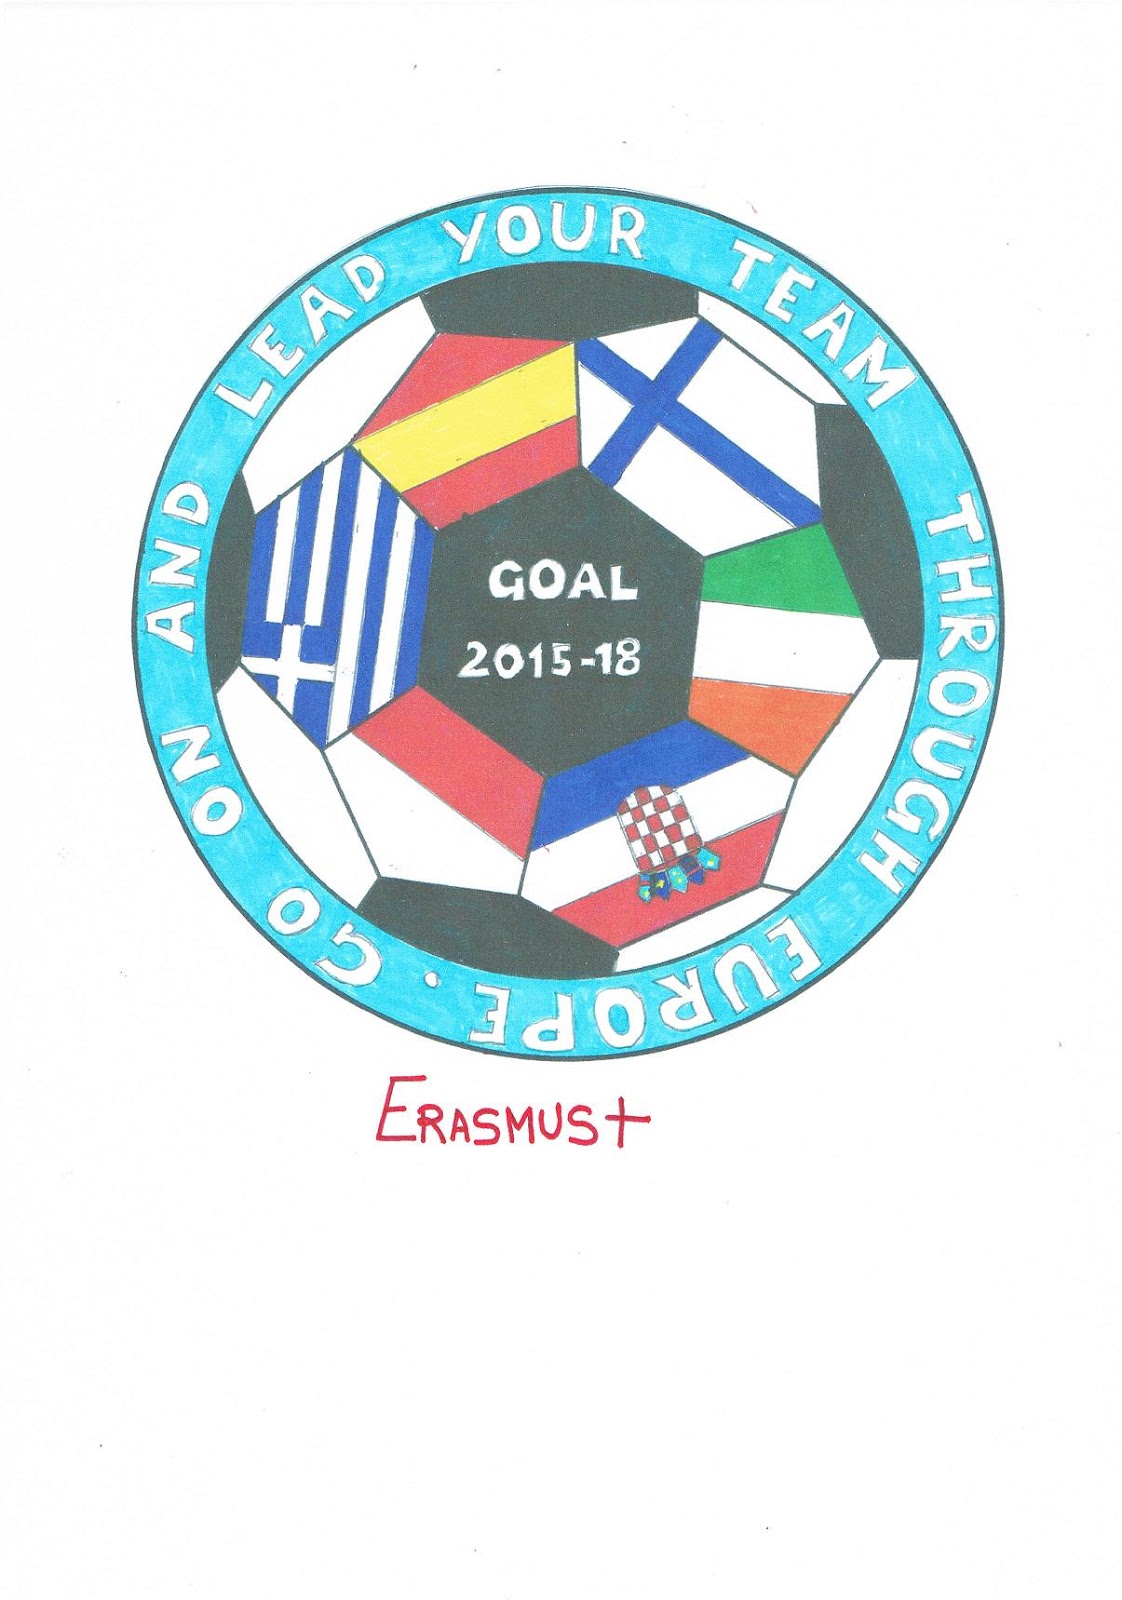 GOAL! ERASMUS+: Logo competition